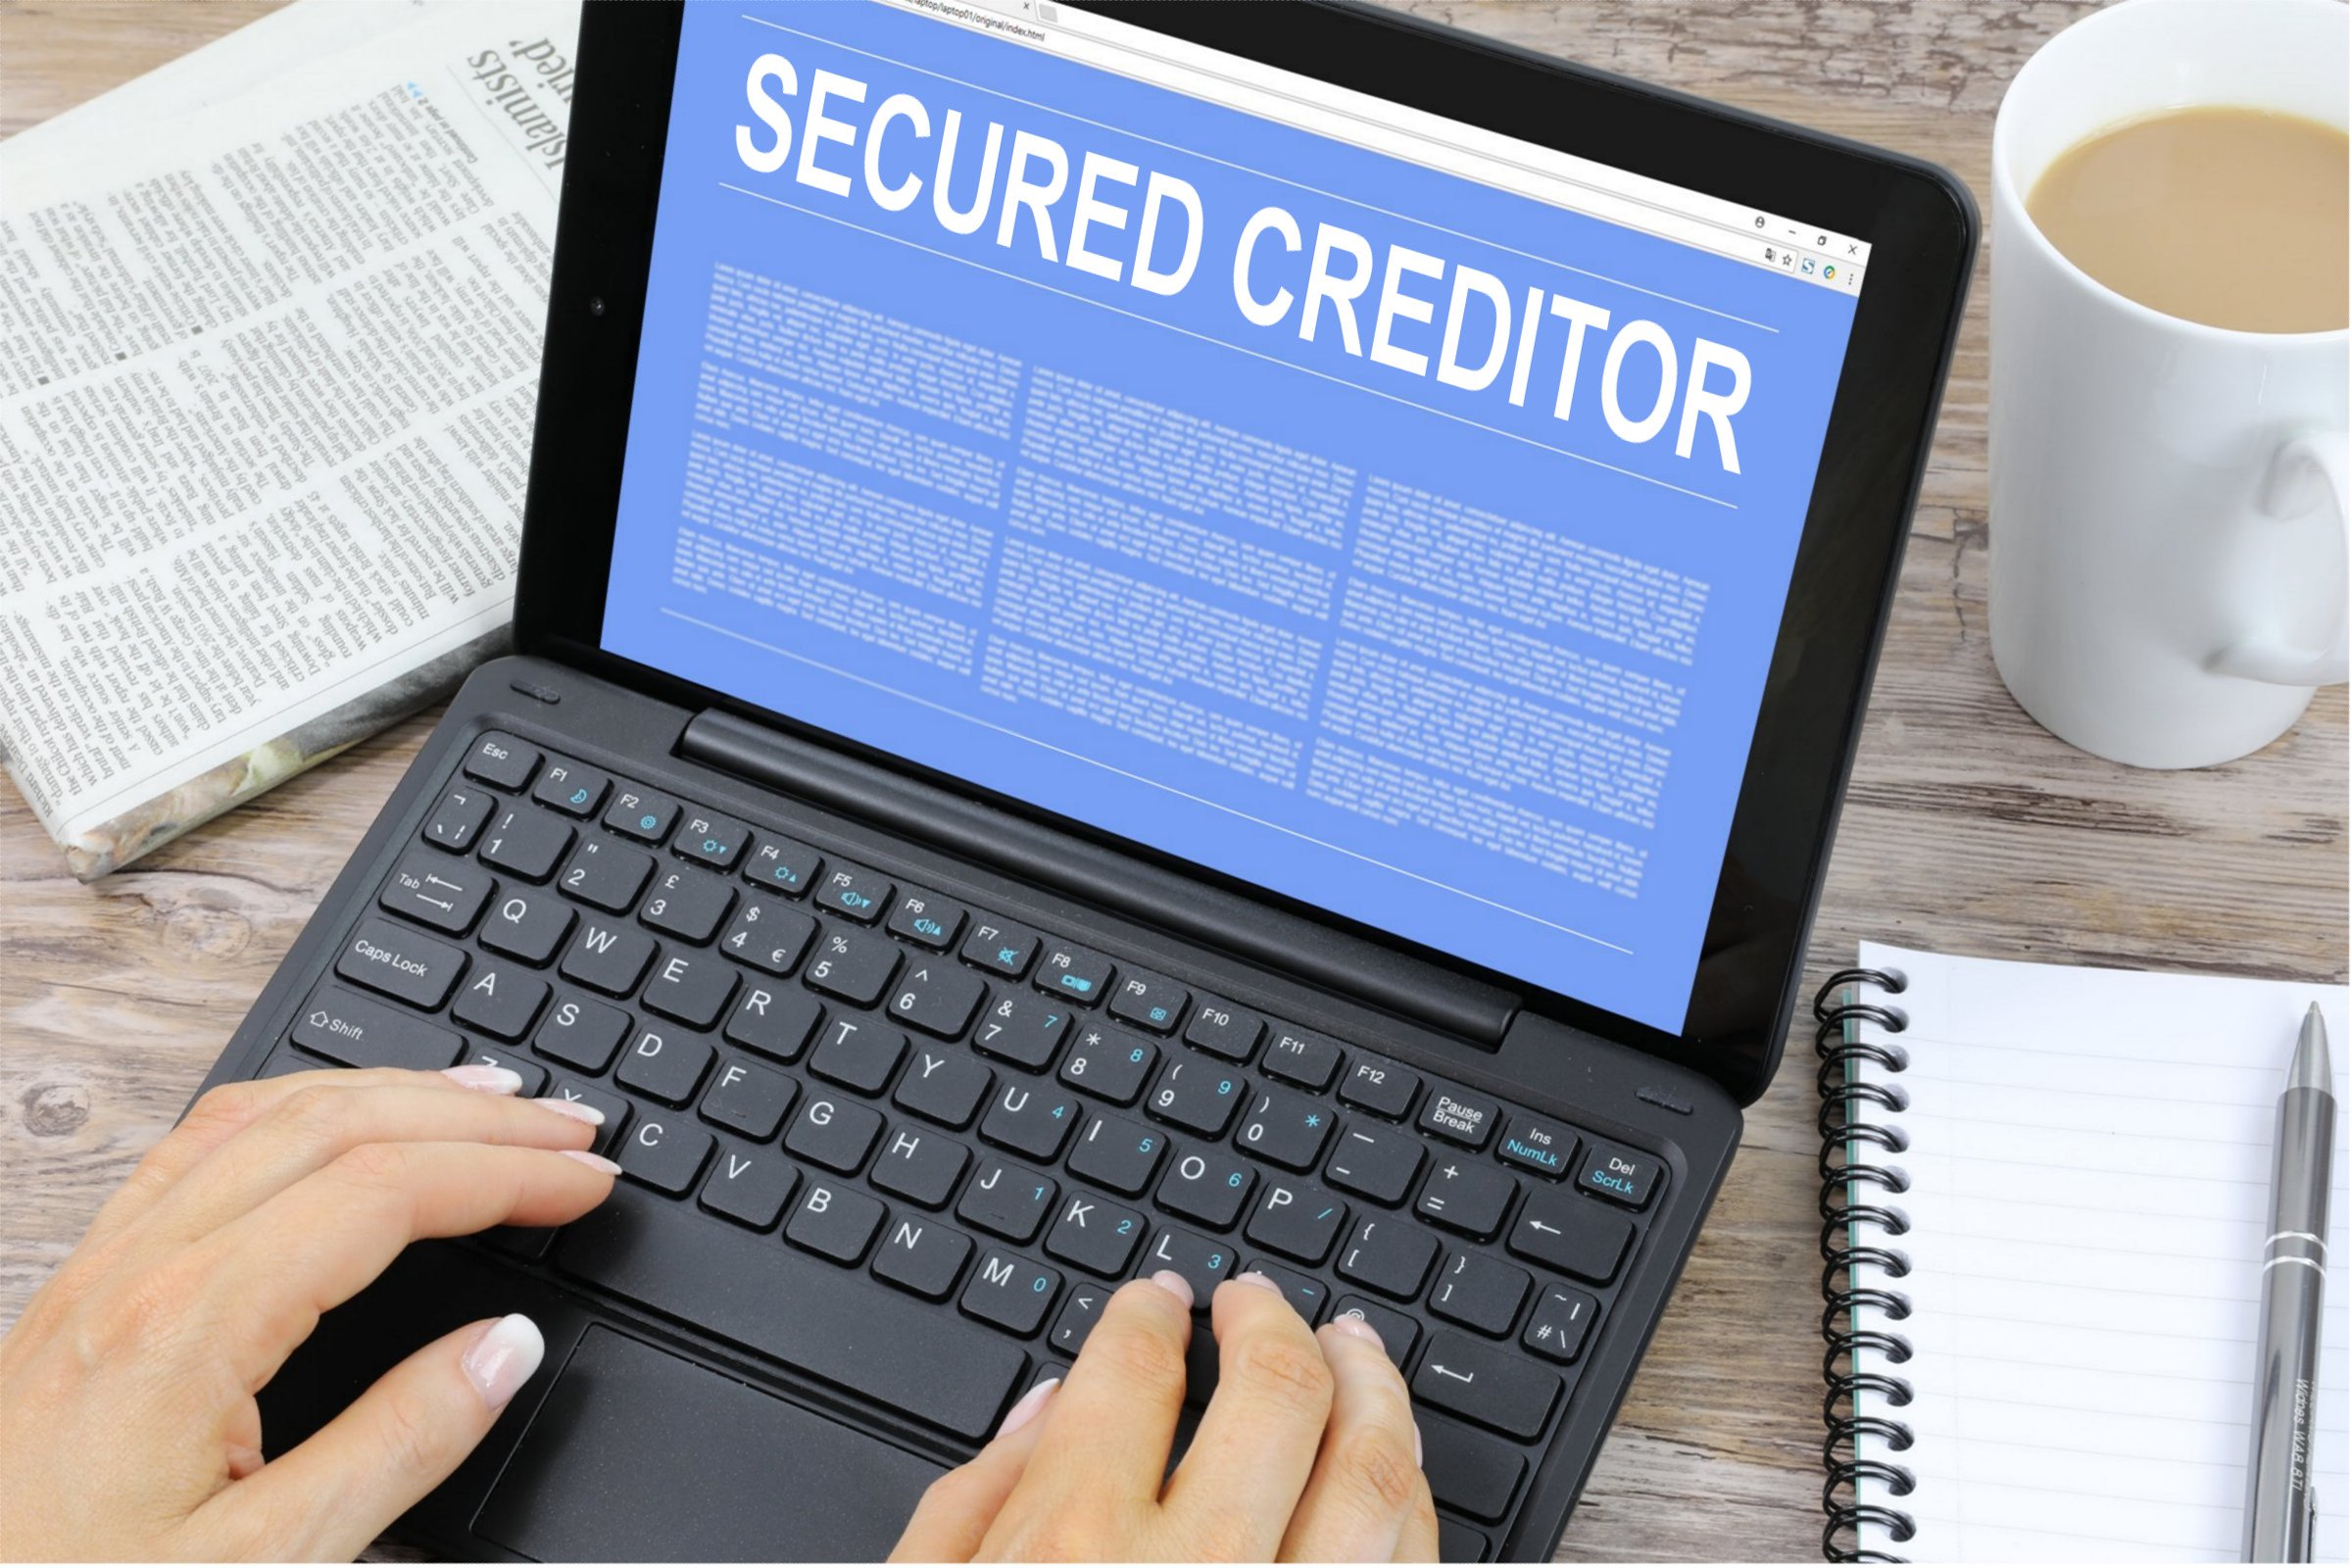 Secured Creditor